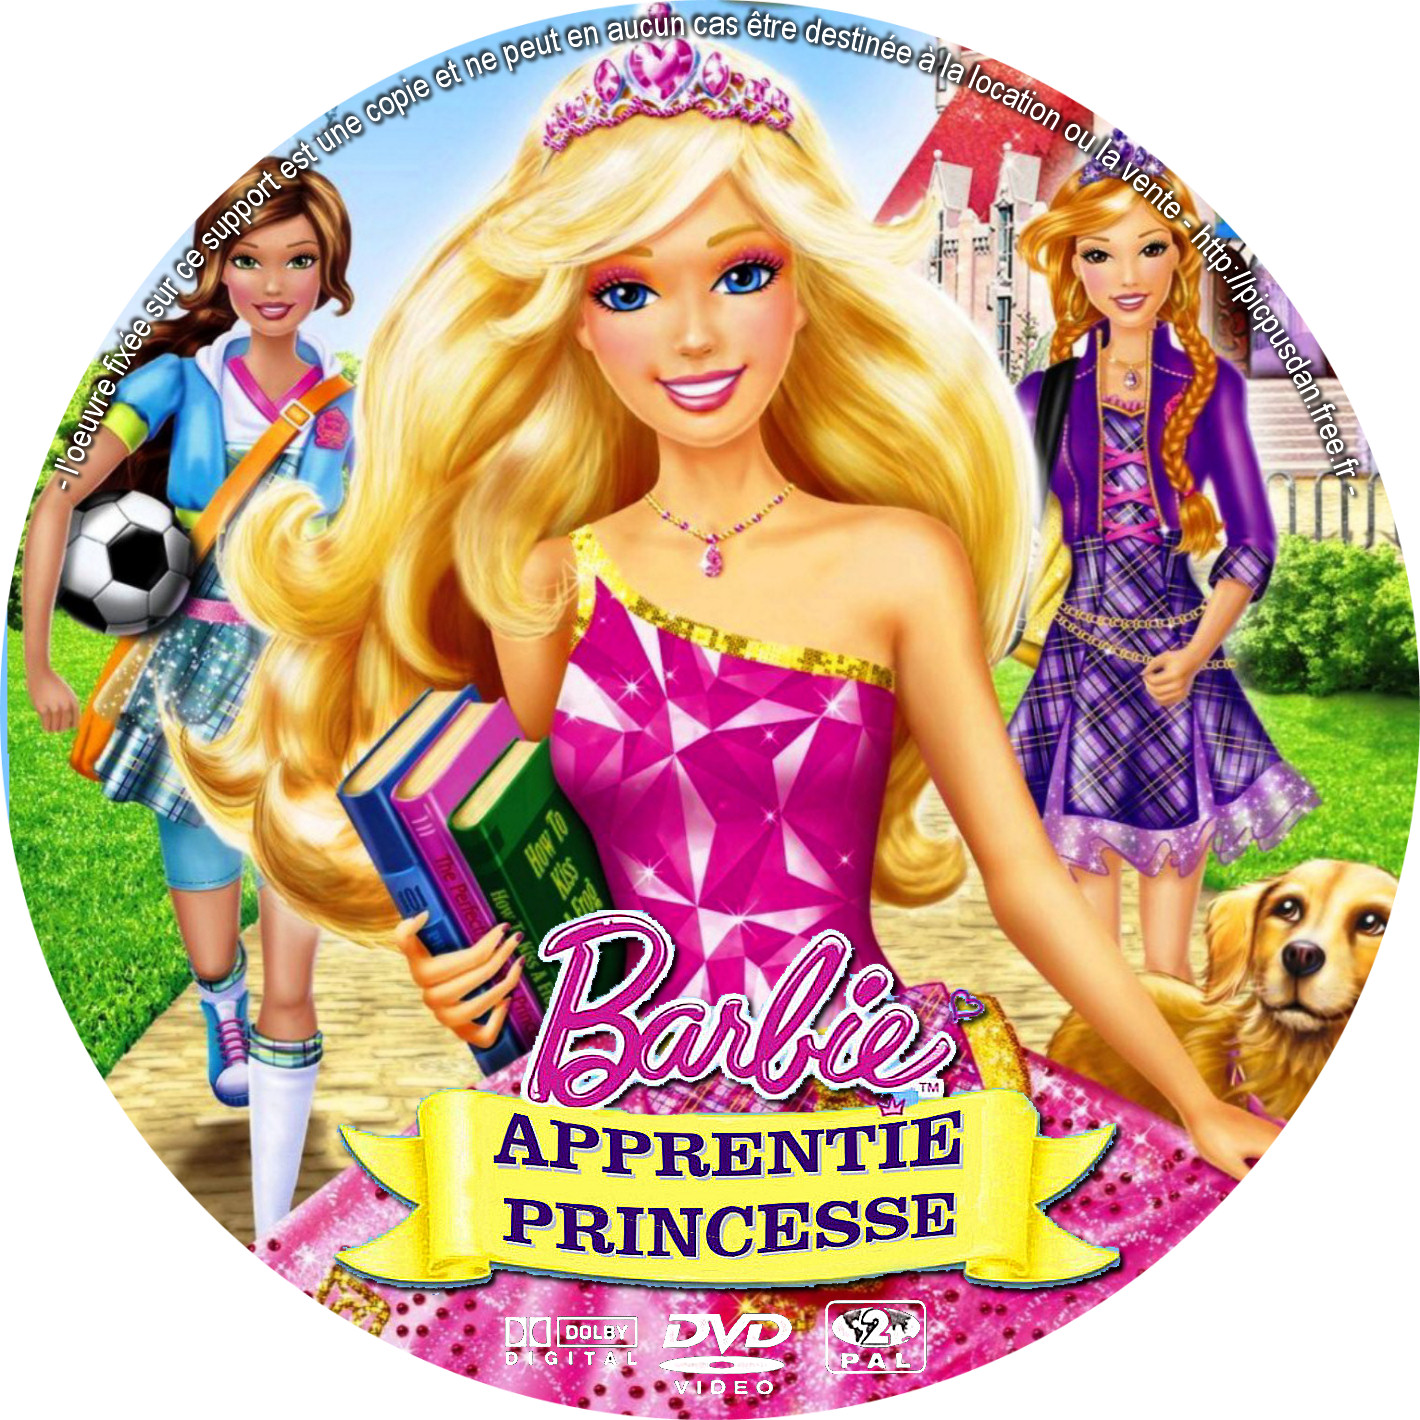 Barbie apprentie princesse custom